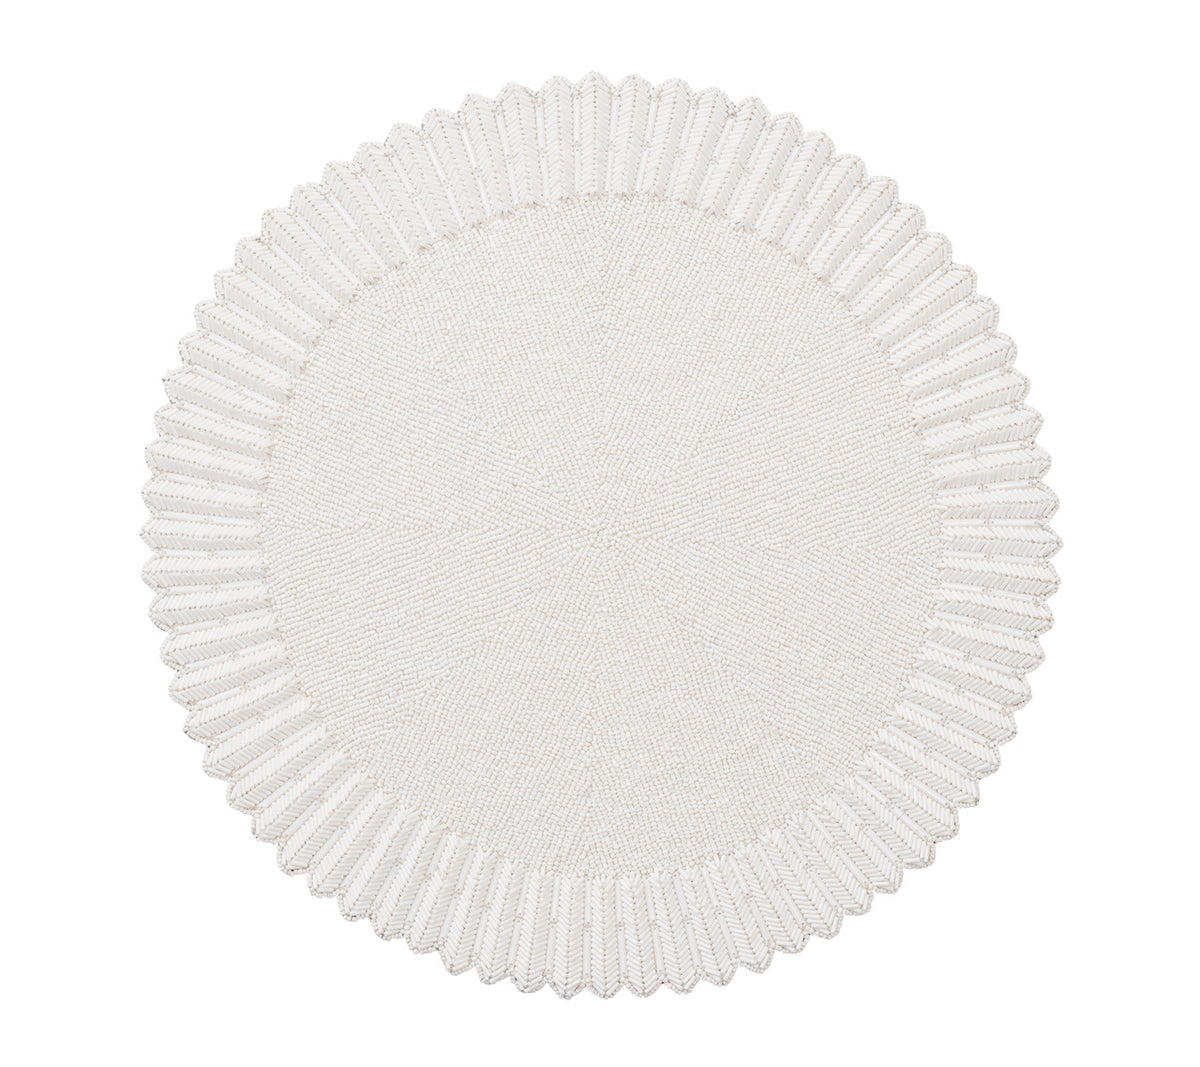 Lumina Napkin in White, Set of 4